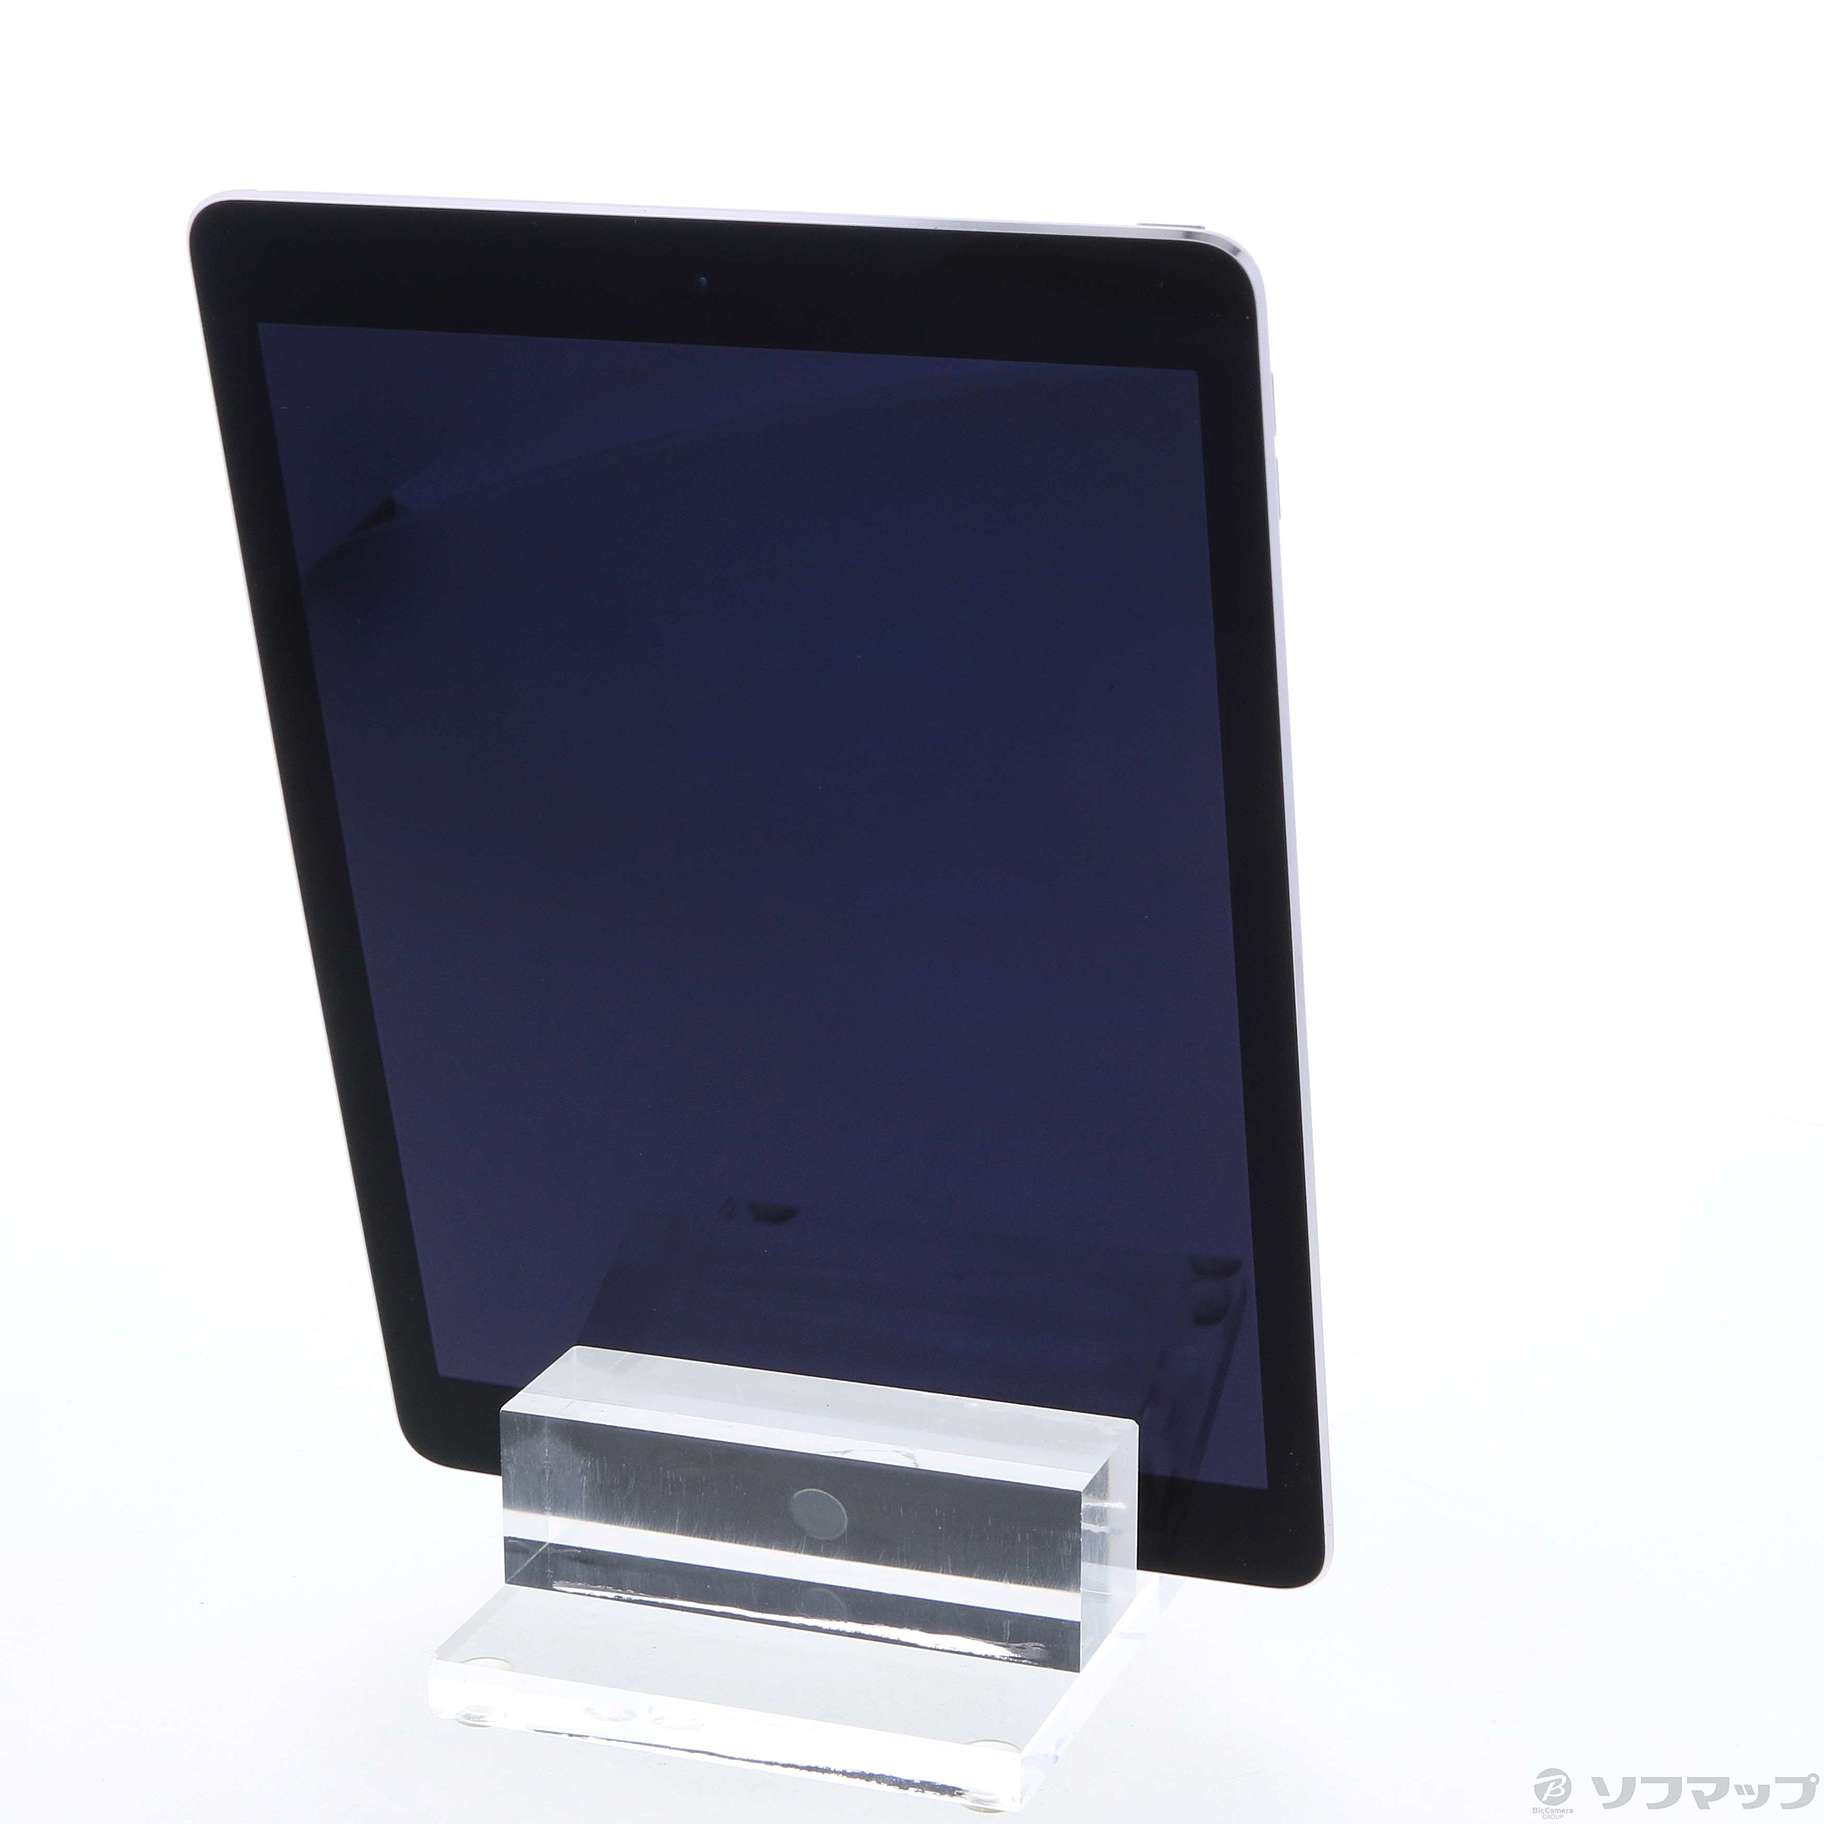 ９月限定特価iPad Air 2 Wi-Fiモデル128GB MGTX2J/A